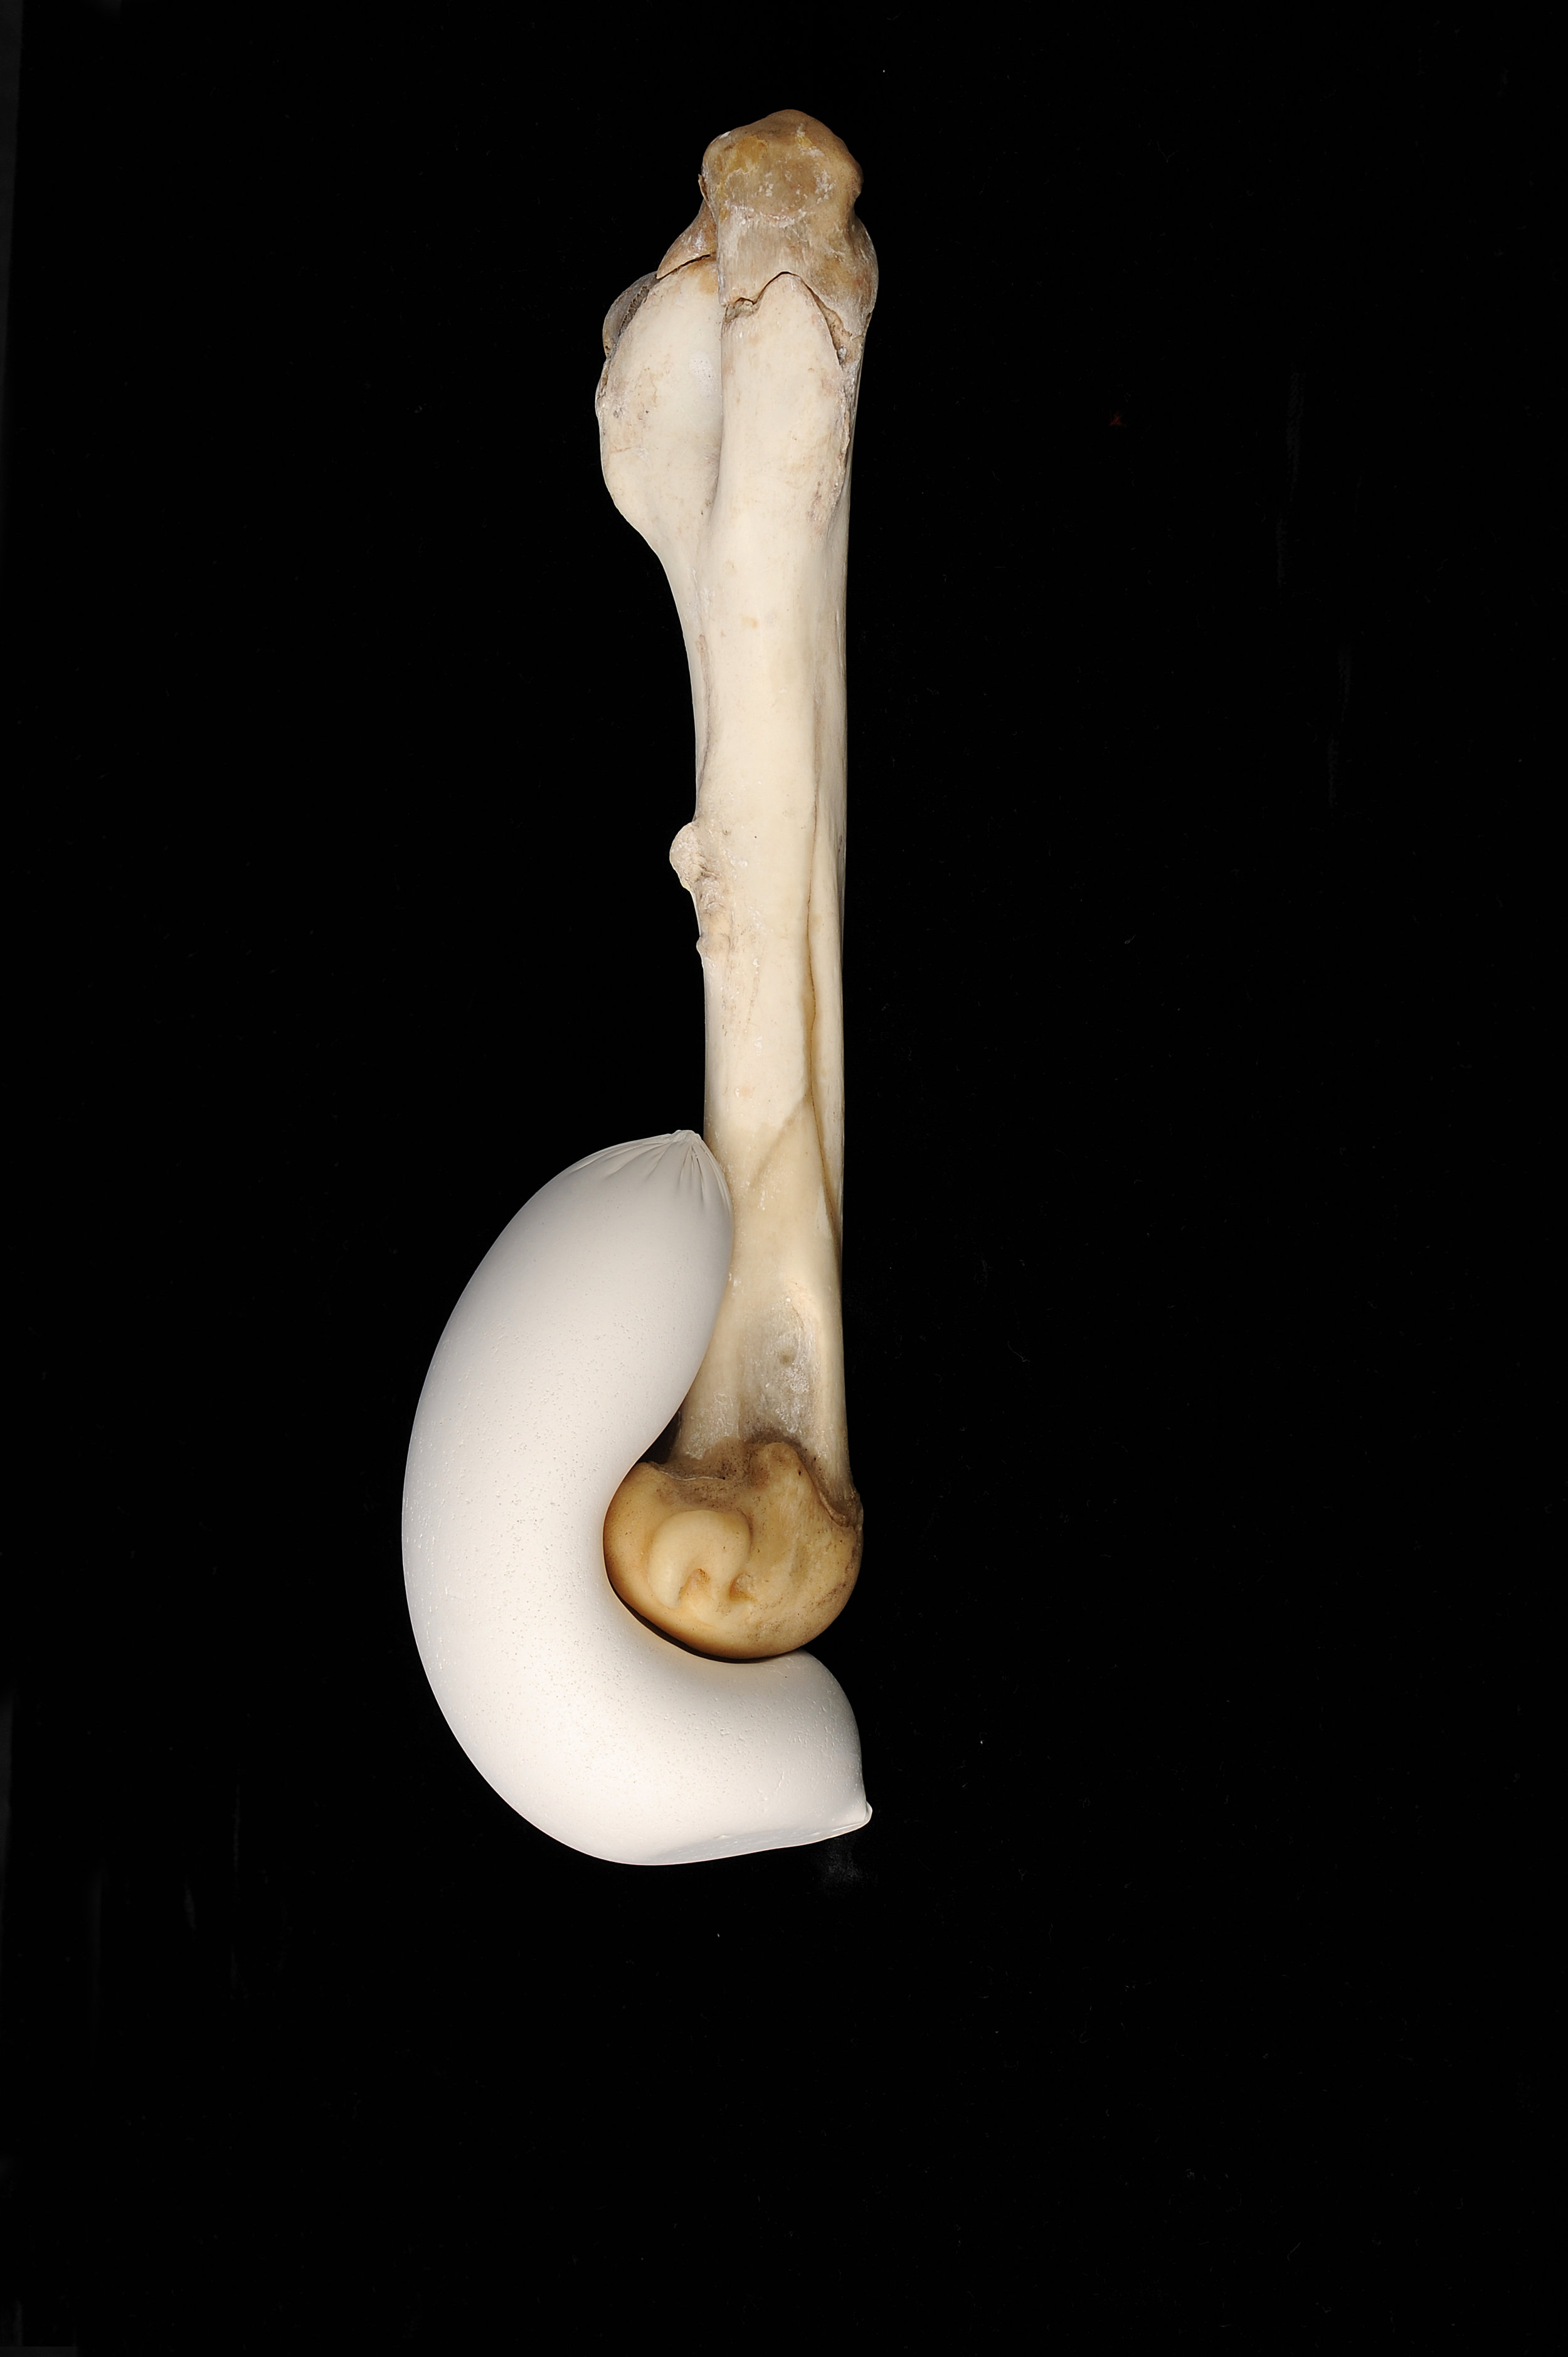 Uncomfortable Embrace - Kangaroo thigh bone, plaster, latex, dimensions 57 cm x 15cm Image-Nu Image.jpg